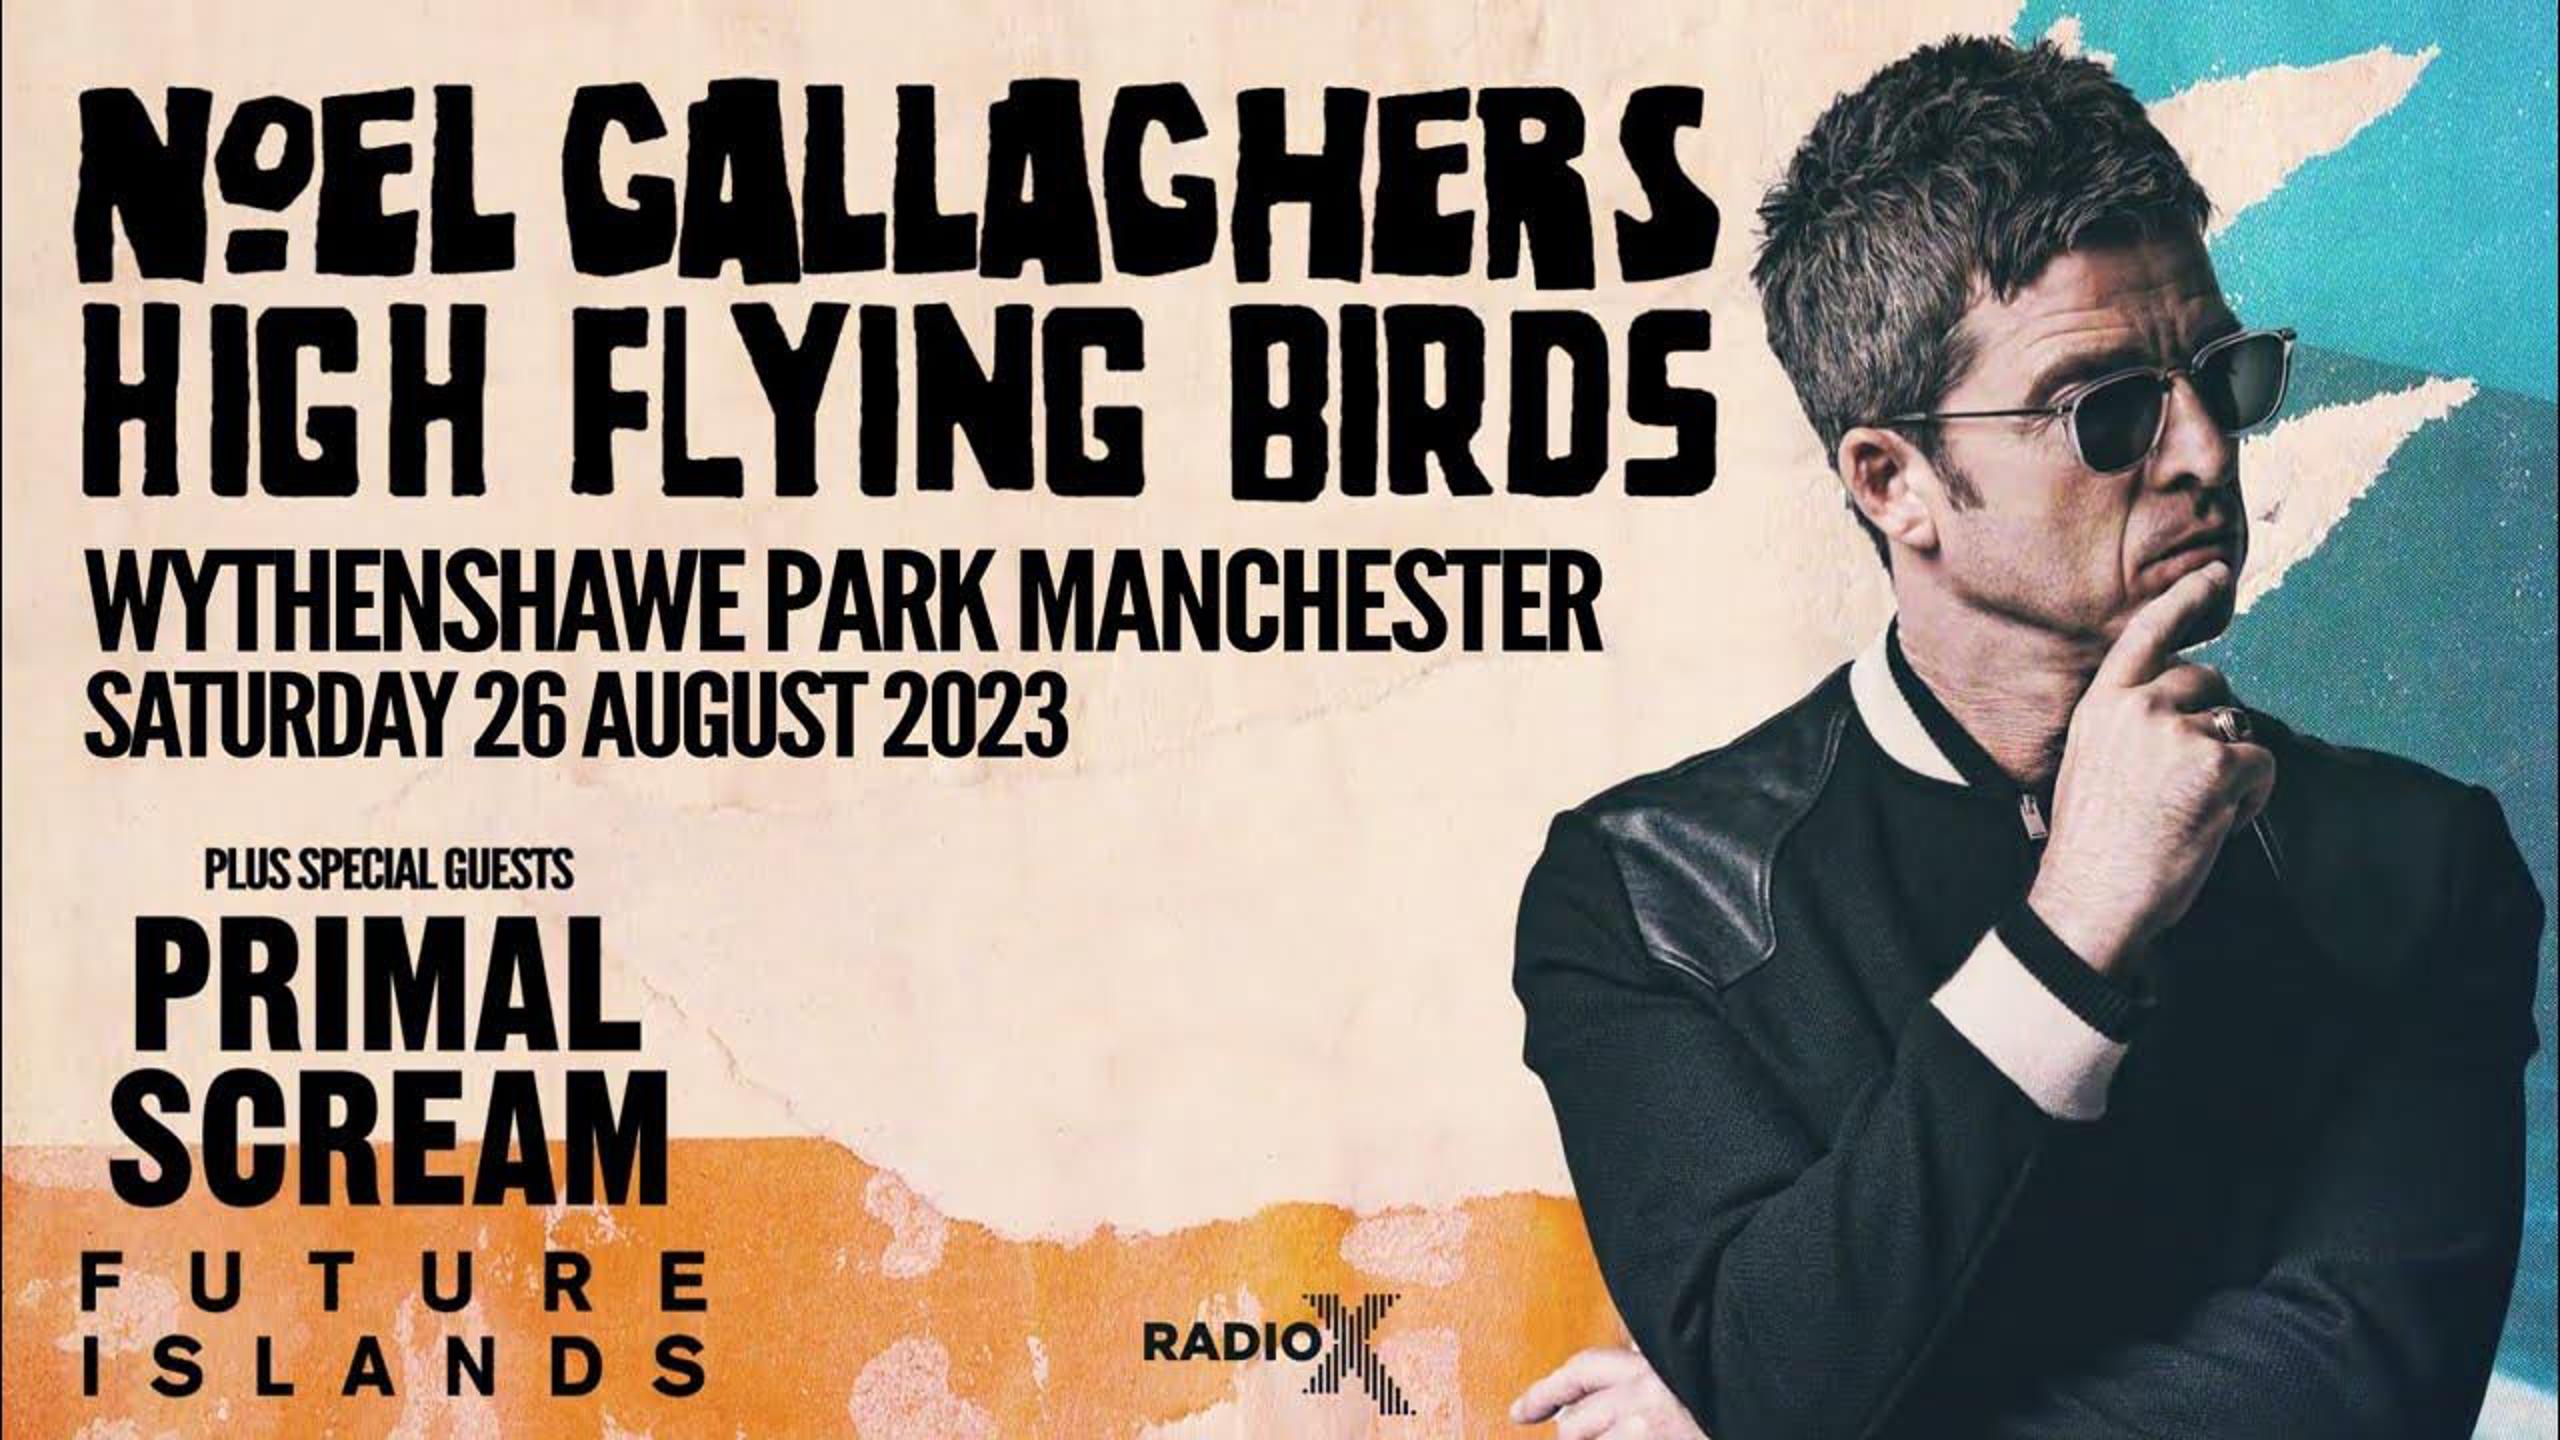 Noel Gallagher's High Flying Birds concert tickets for Wythenshawe Park